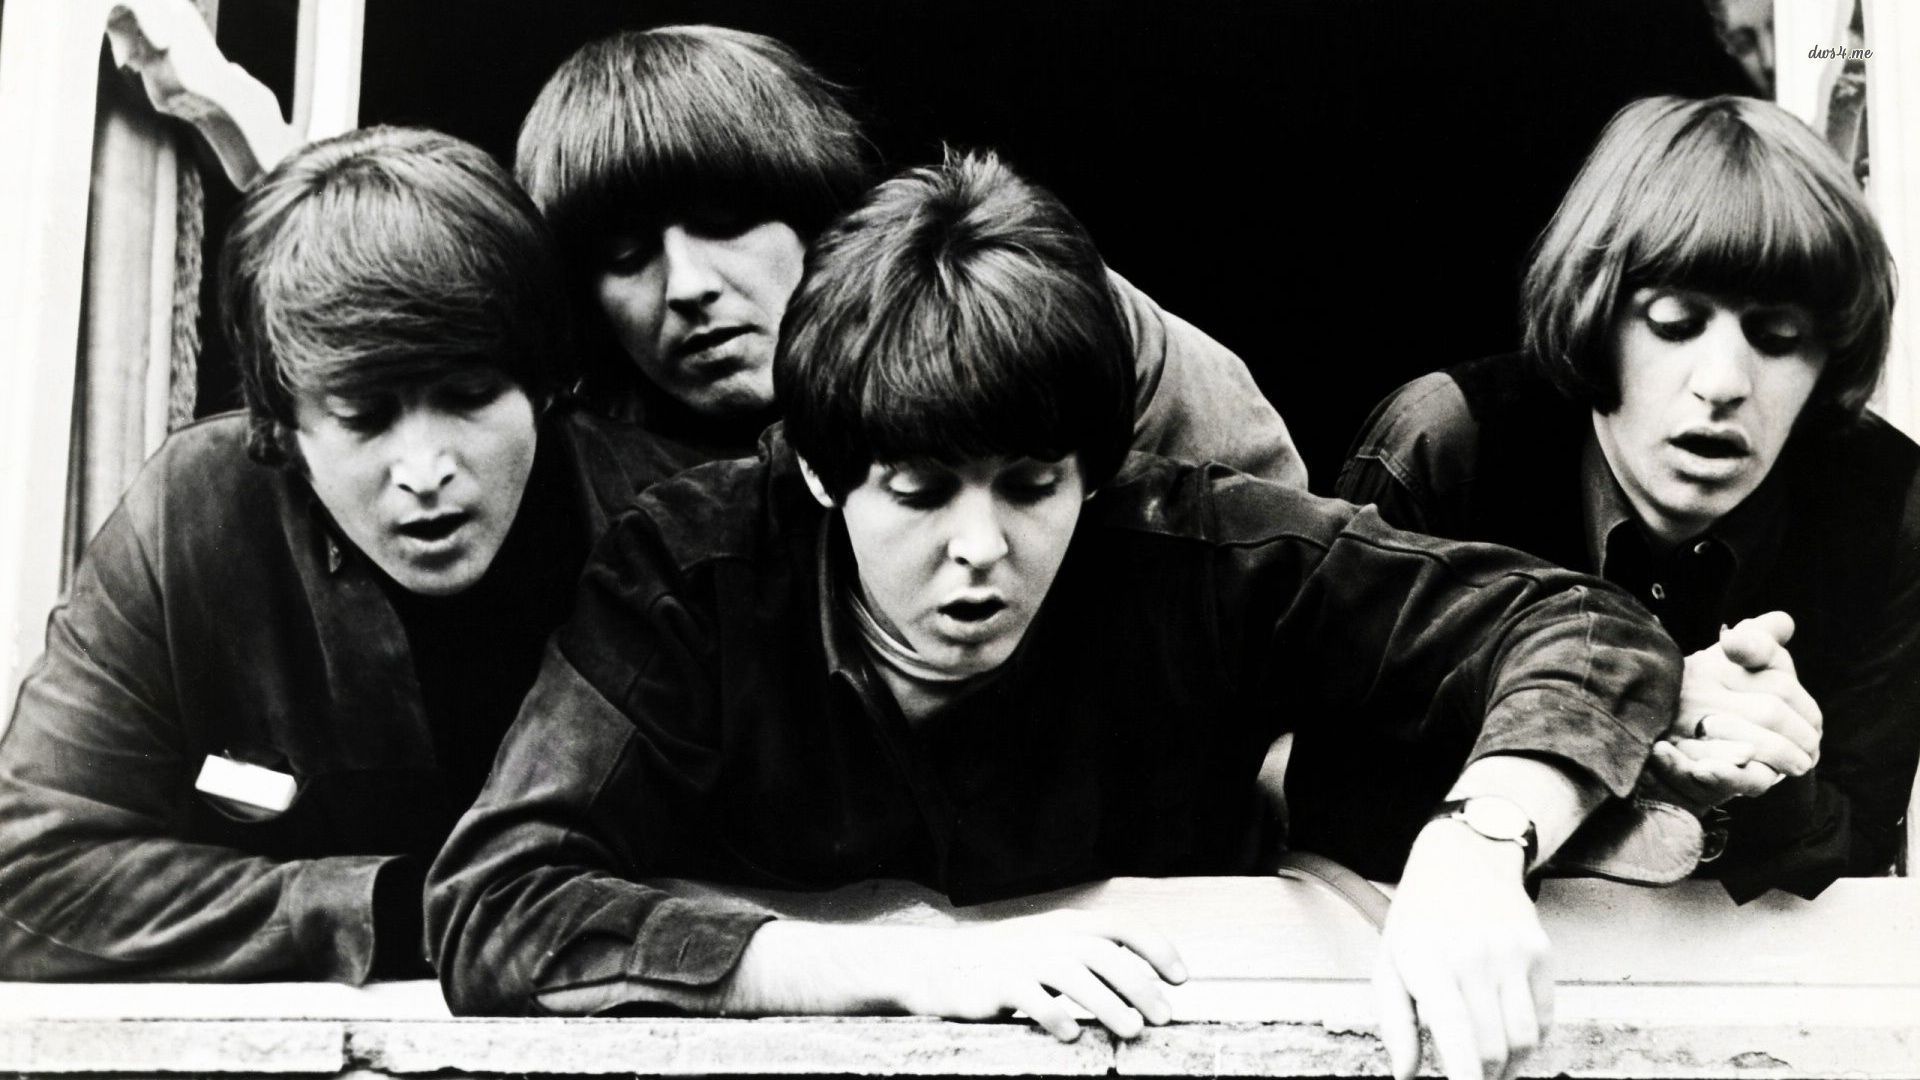 The Beatles wallpaper - Music wallpapers - #7187